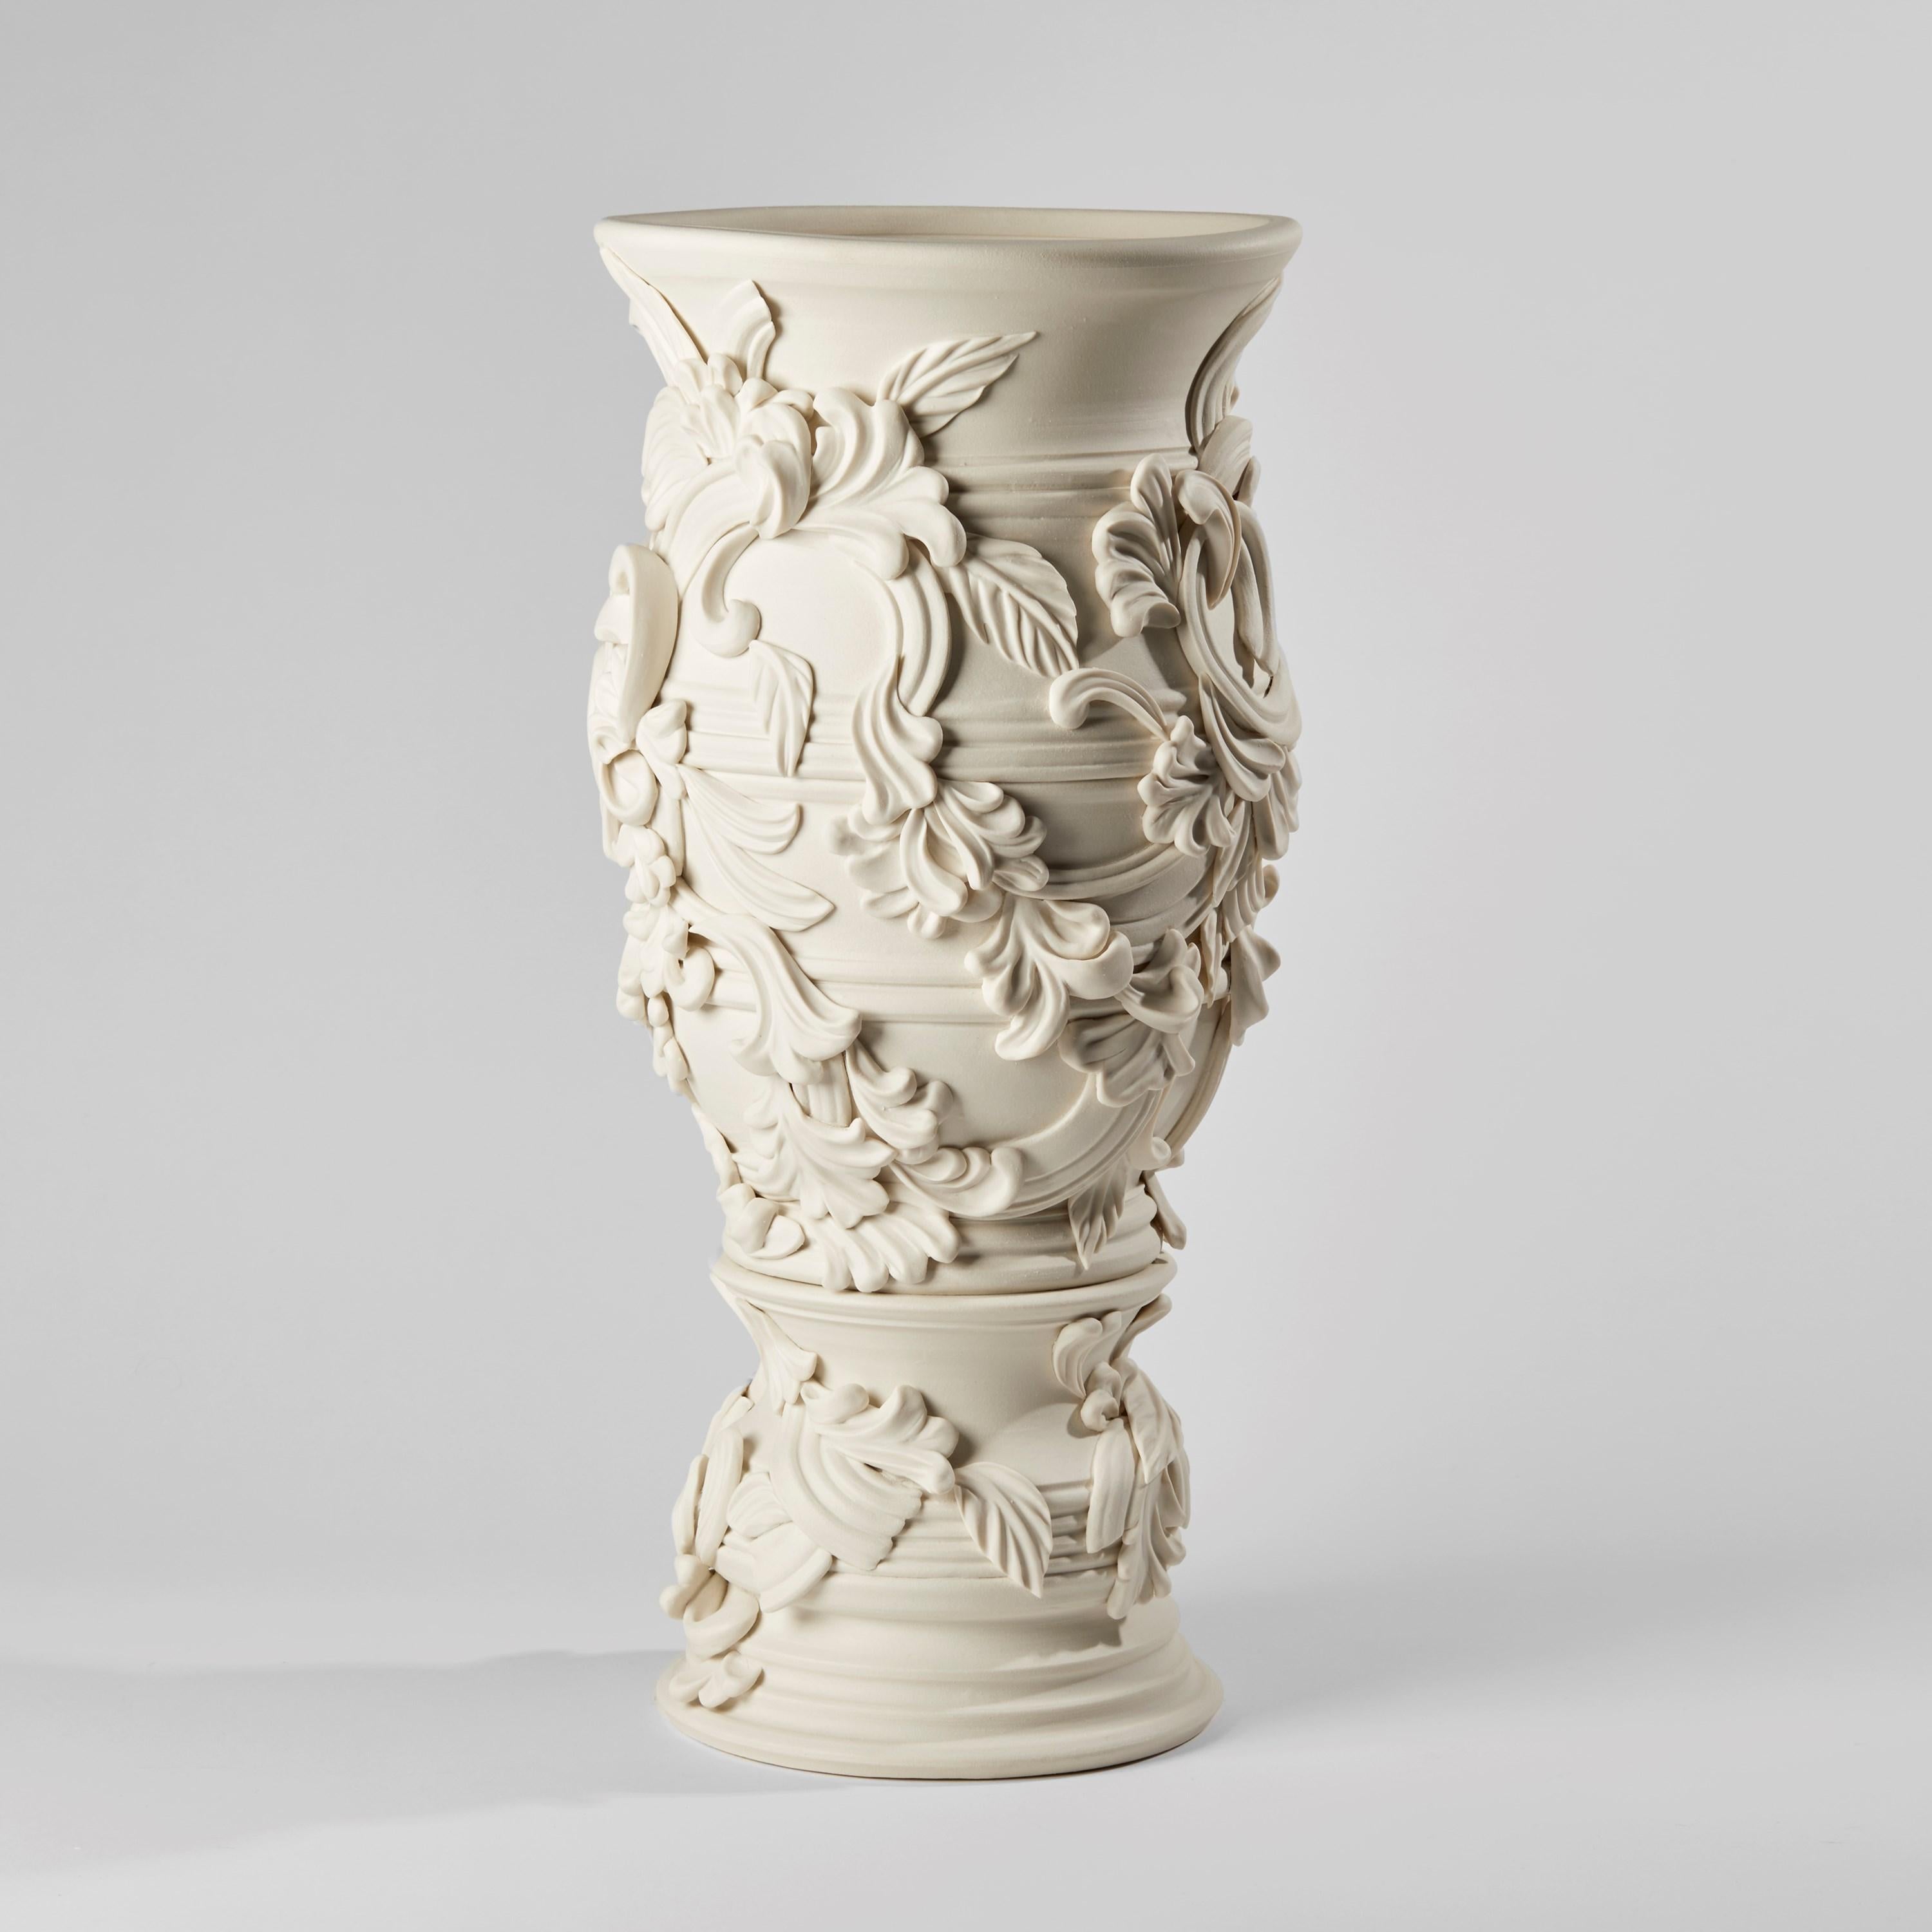 British Promenade IV, a Unique Ceramic Sculptural Tall Vase in Porcelain by Jo Taylor For Sale